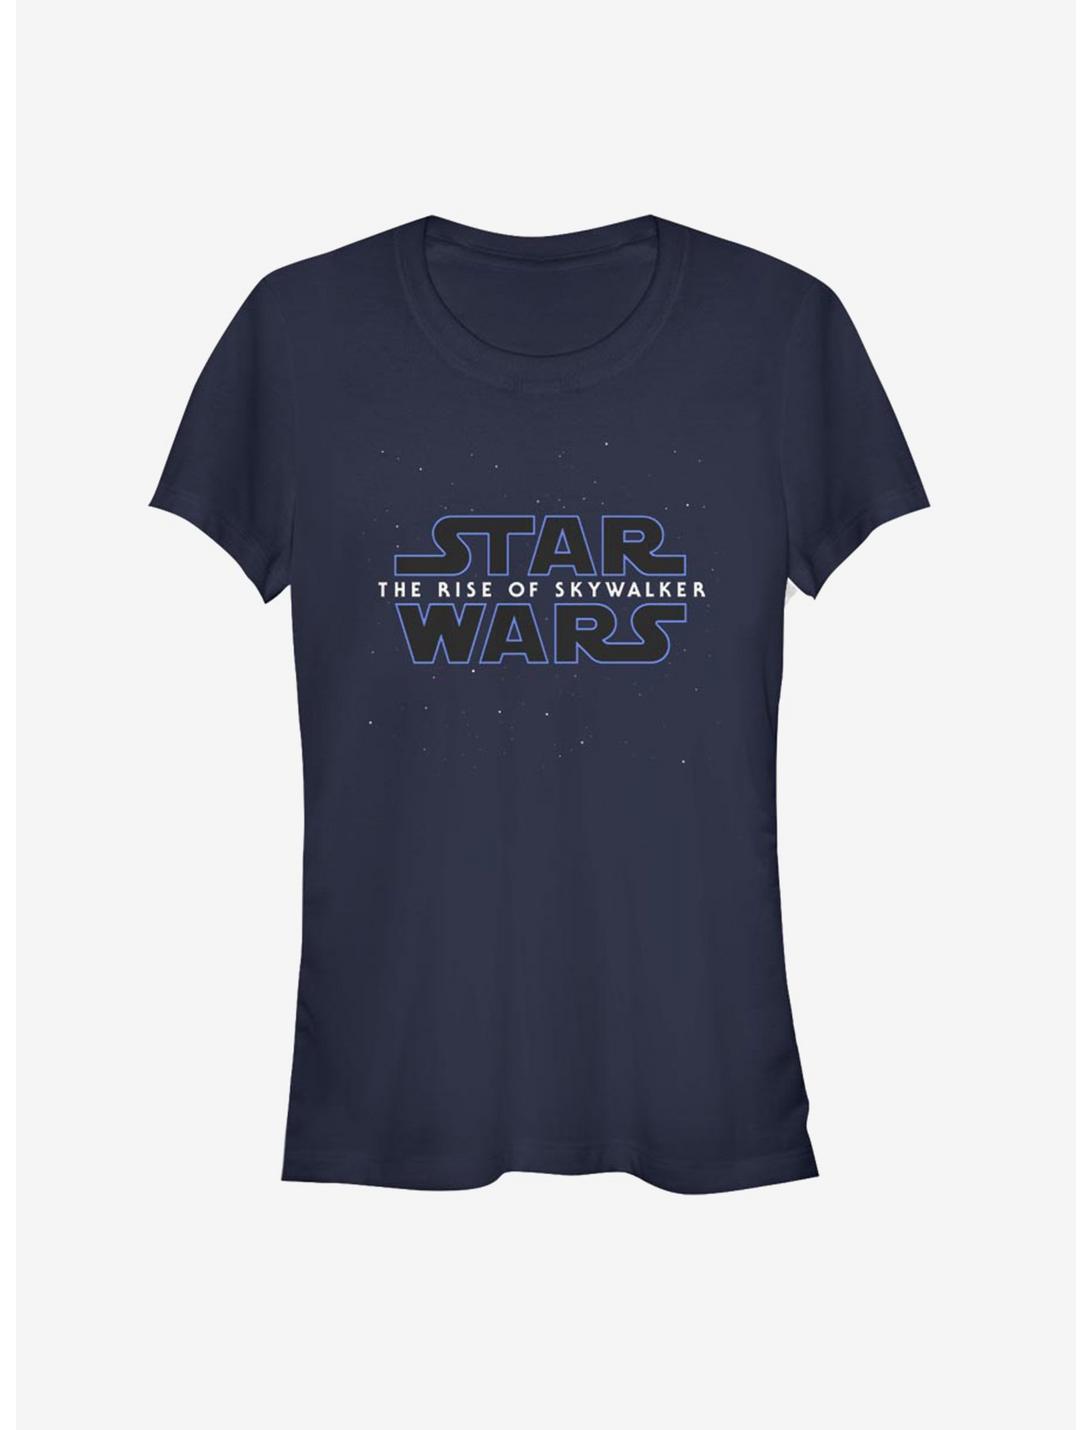 Star Wars: The Rise of Skywalker Stars Girls T-Shirt, NAVY, hi-res